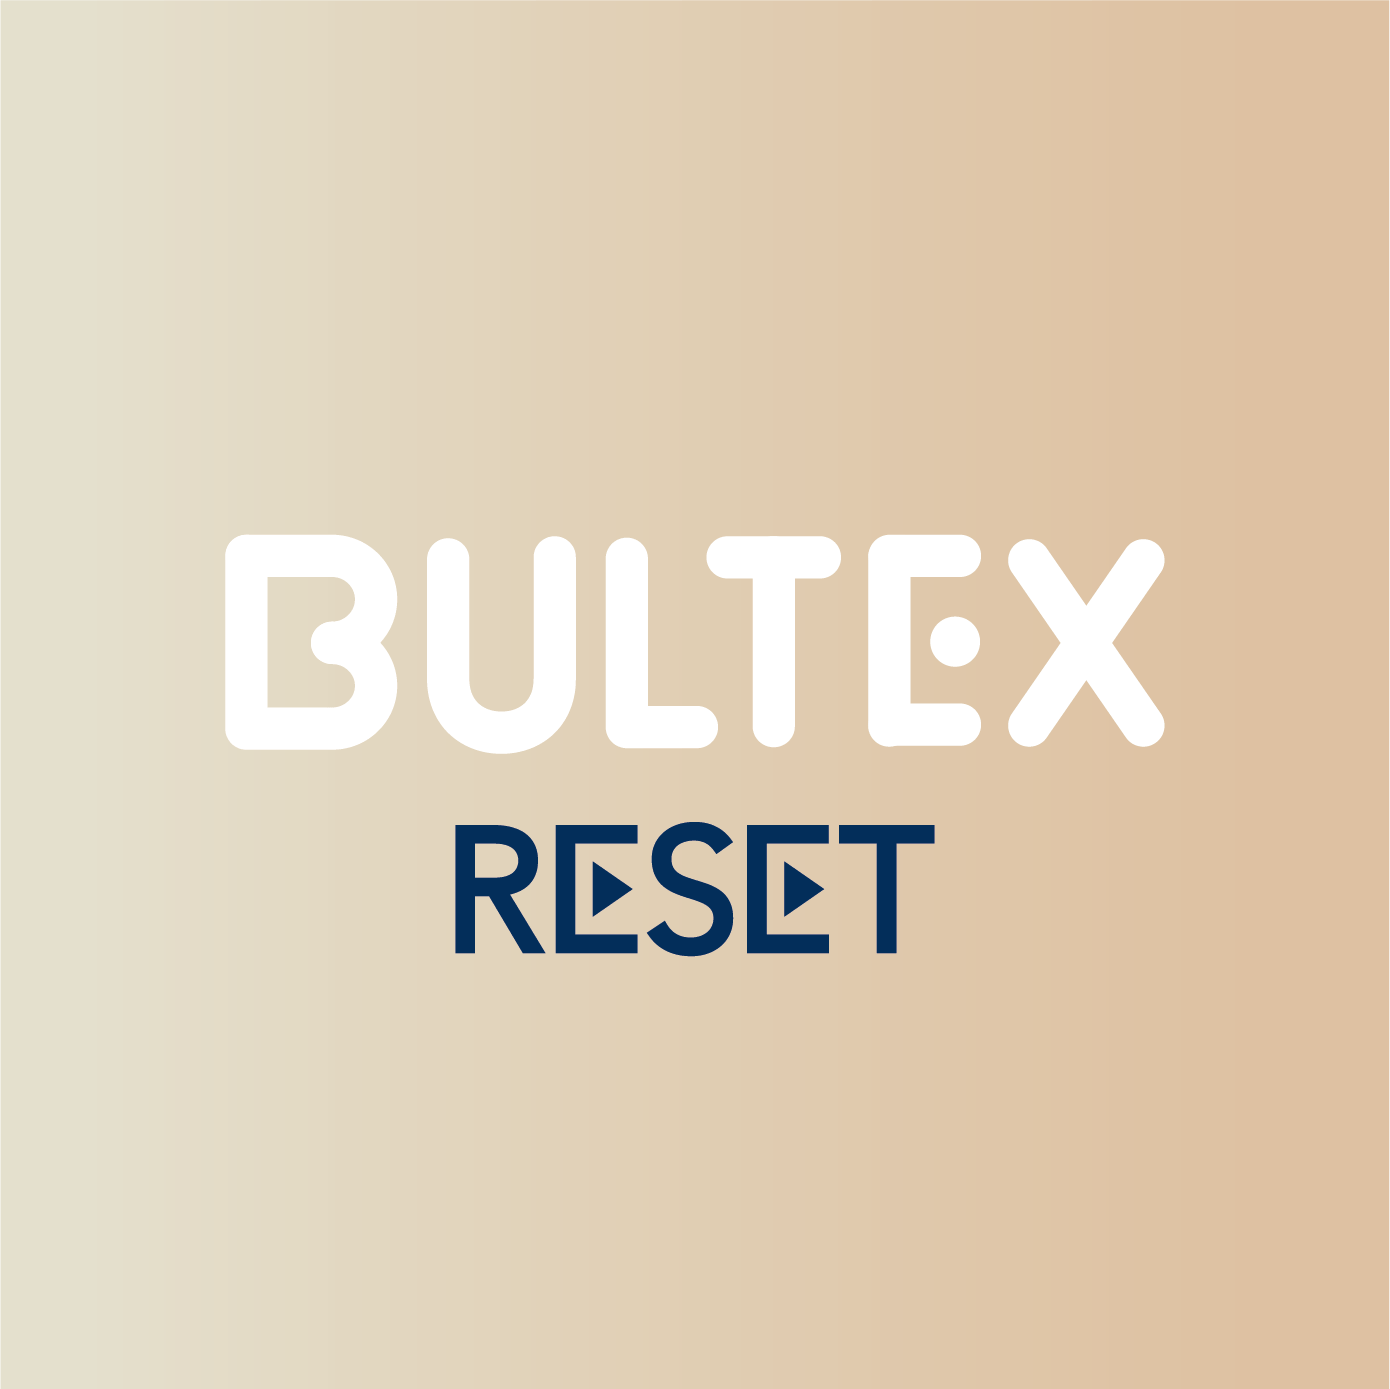 Logo_Bultex_Reset